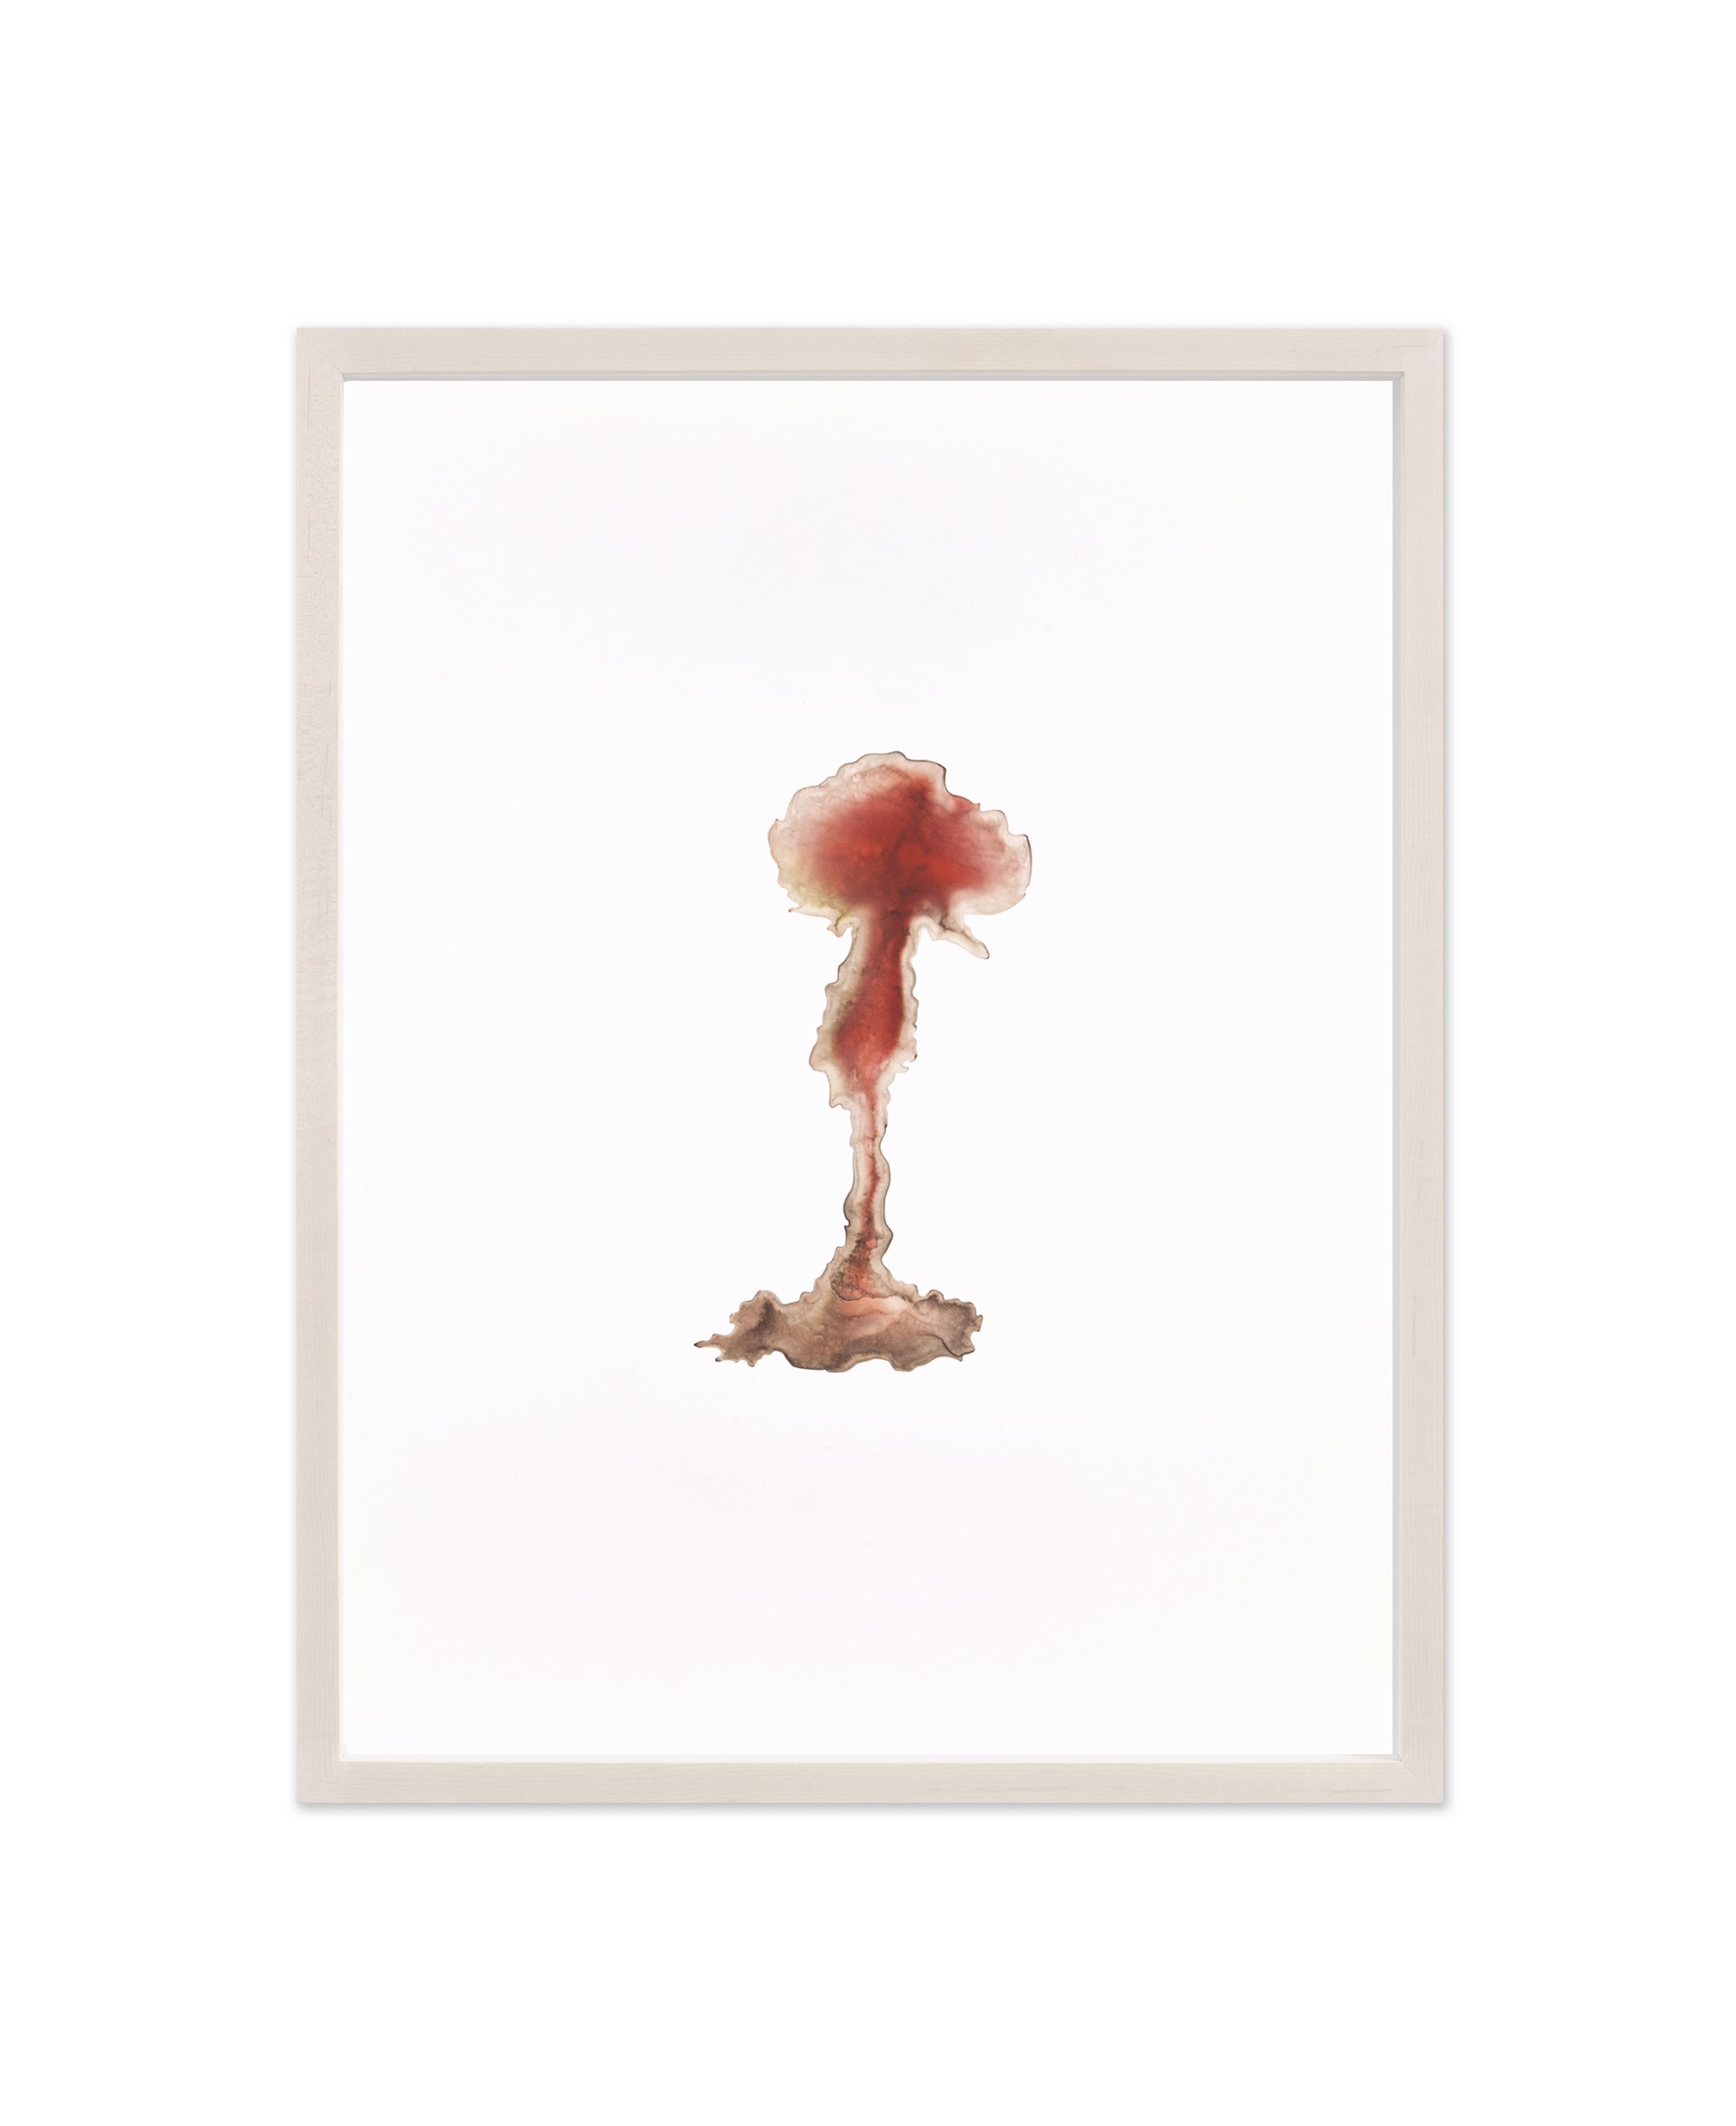 Mushroom Cloud #1.9 by Jugnet + Clairet